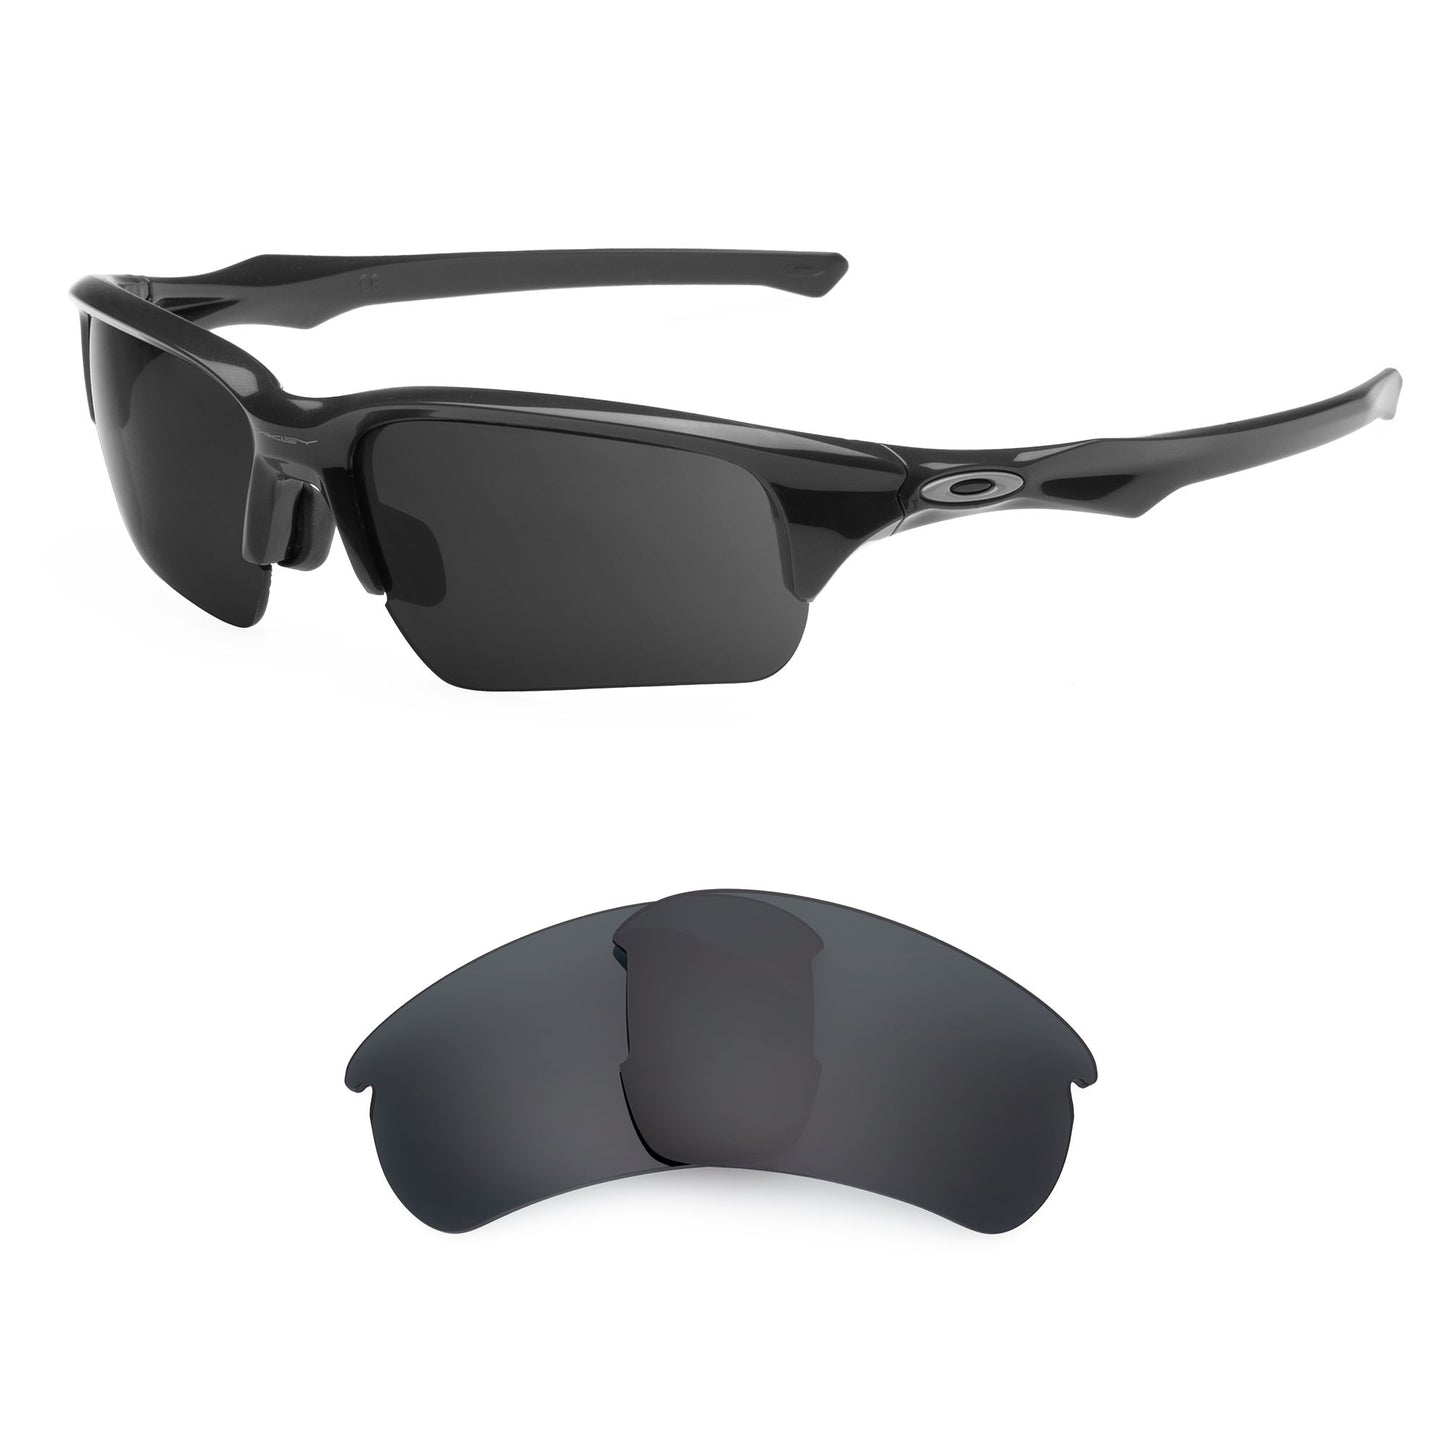 Oakley Flak Beta (Low Bridge Fit) sunglasses with replacement lenses